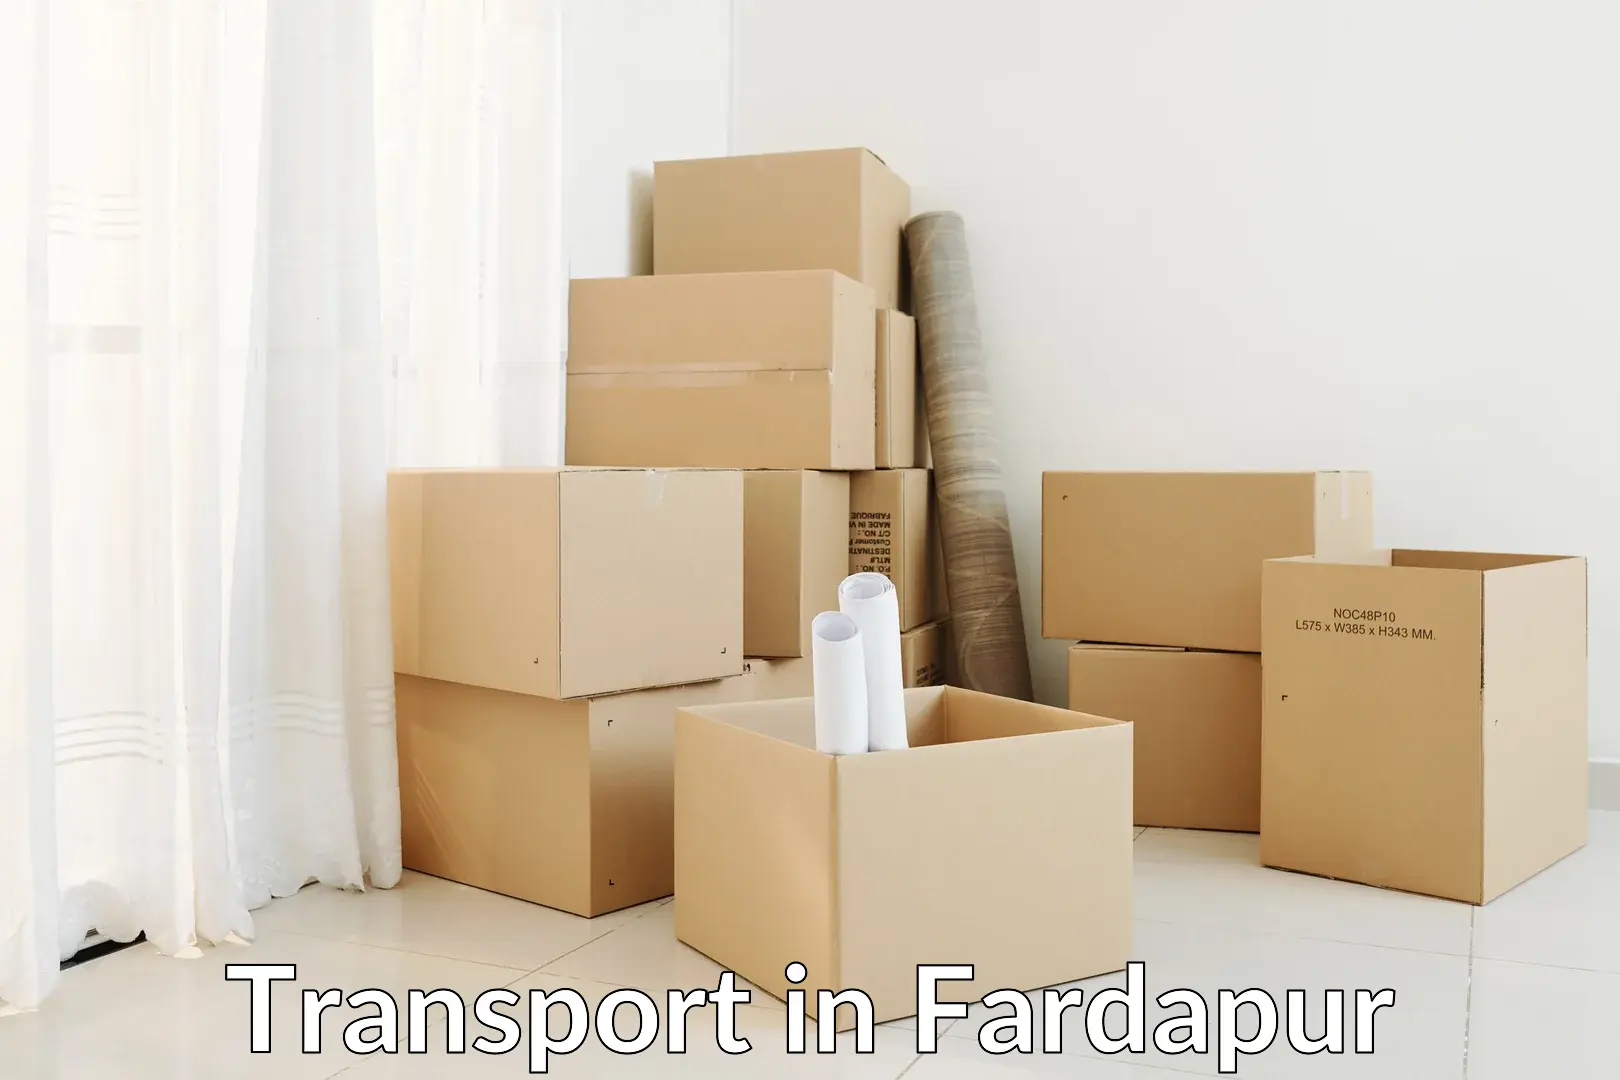 Interstate goods transport in Fardapur